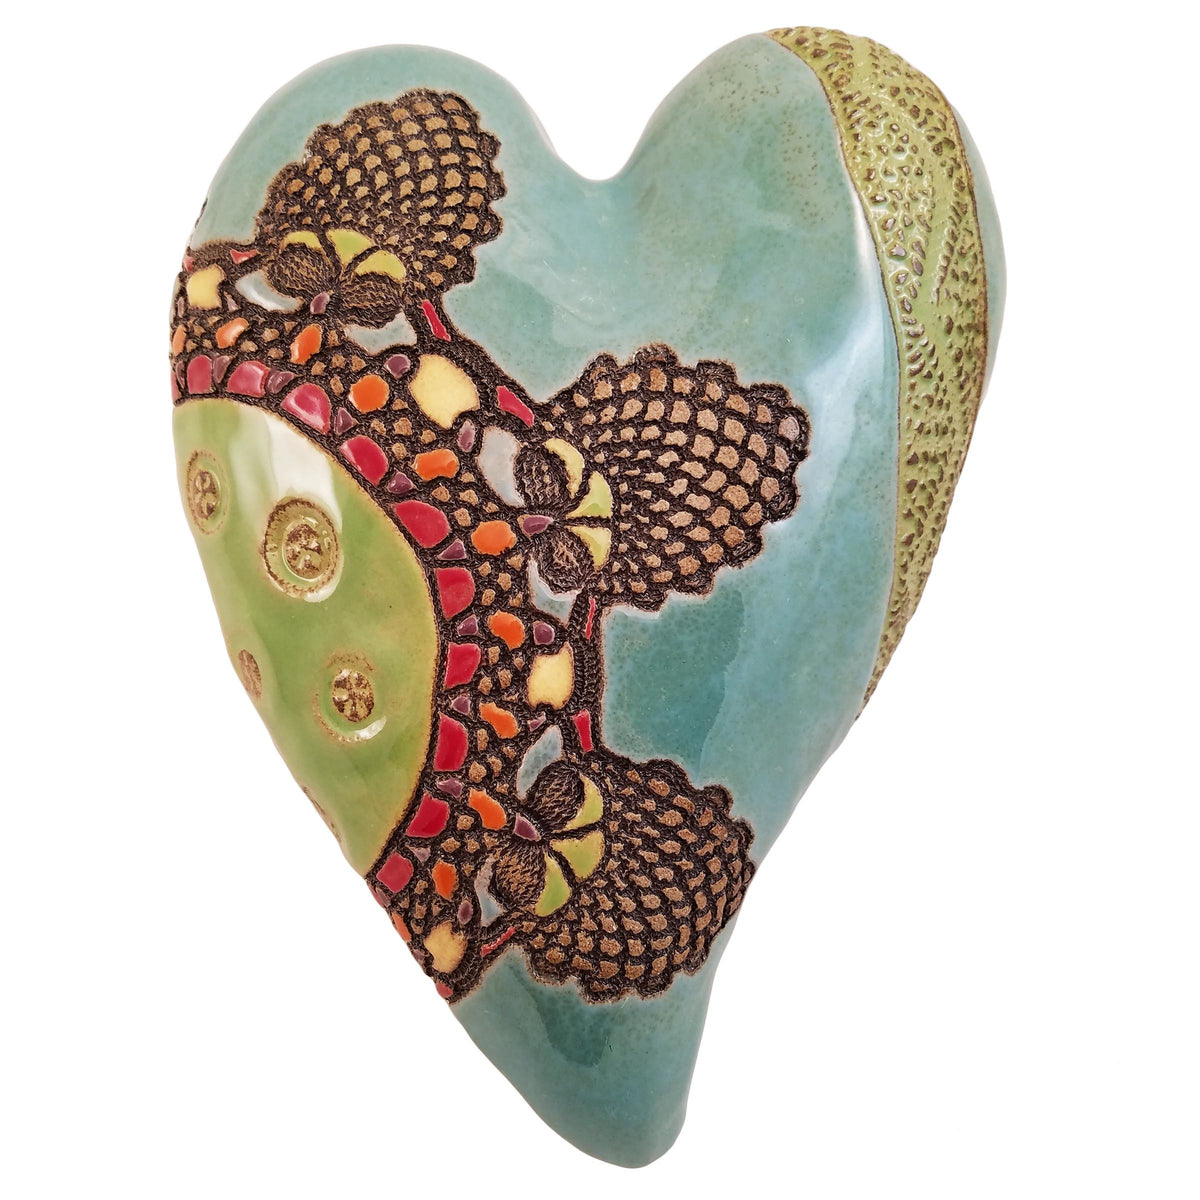 Marie's Travels Ceramic Wall Heart